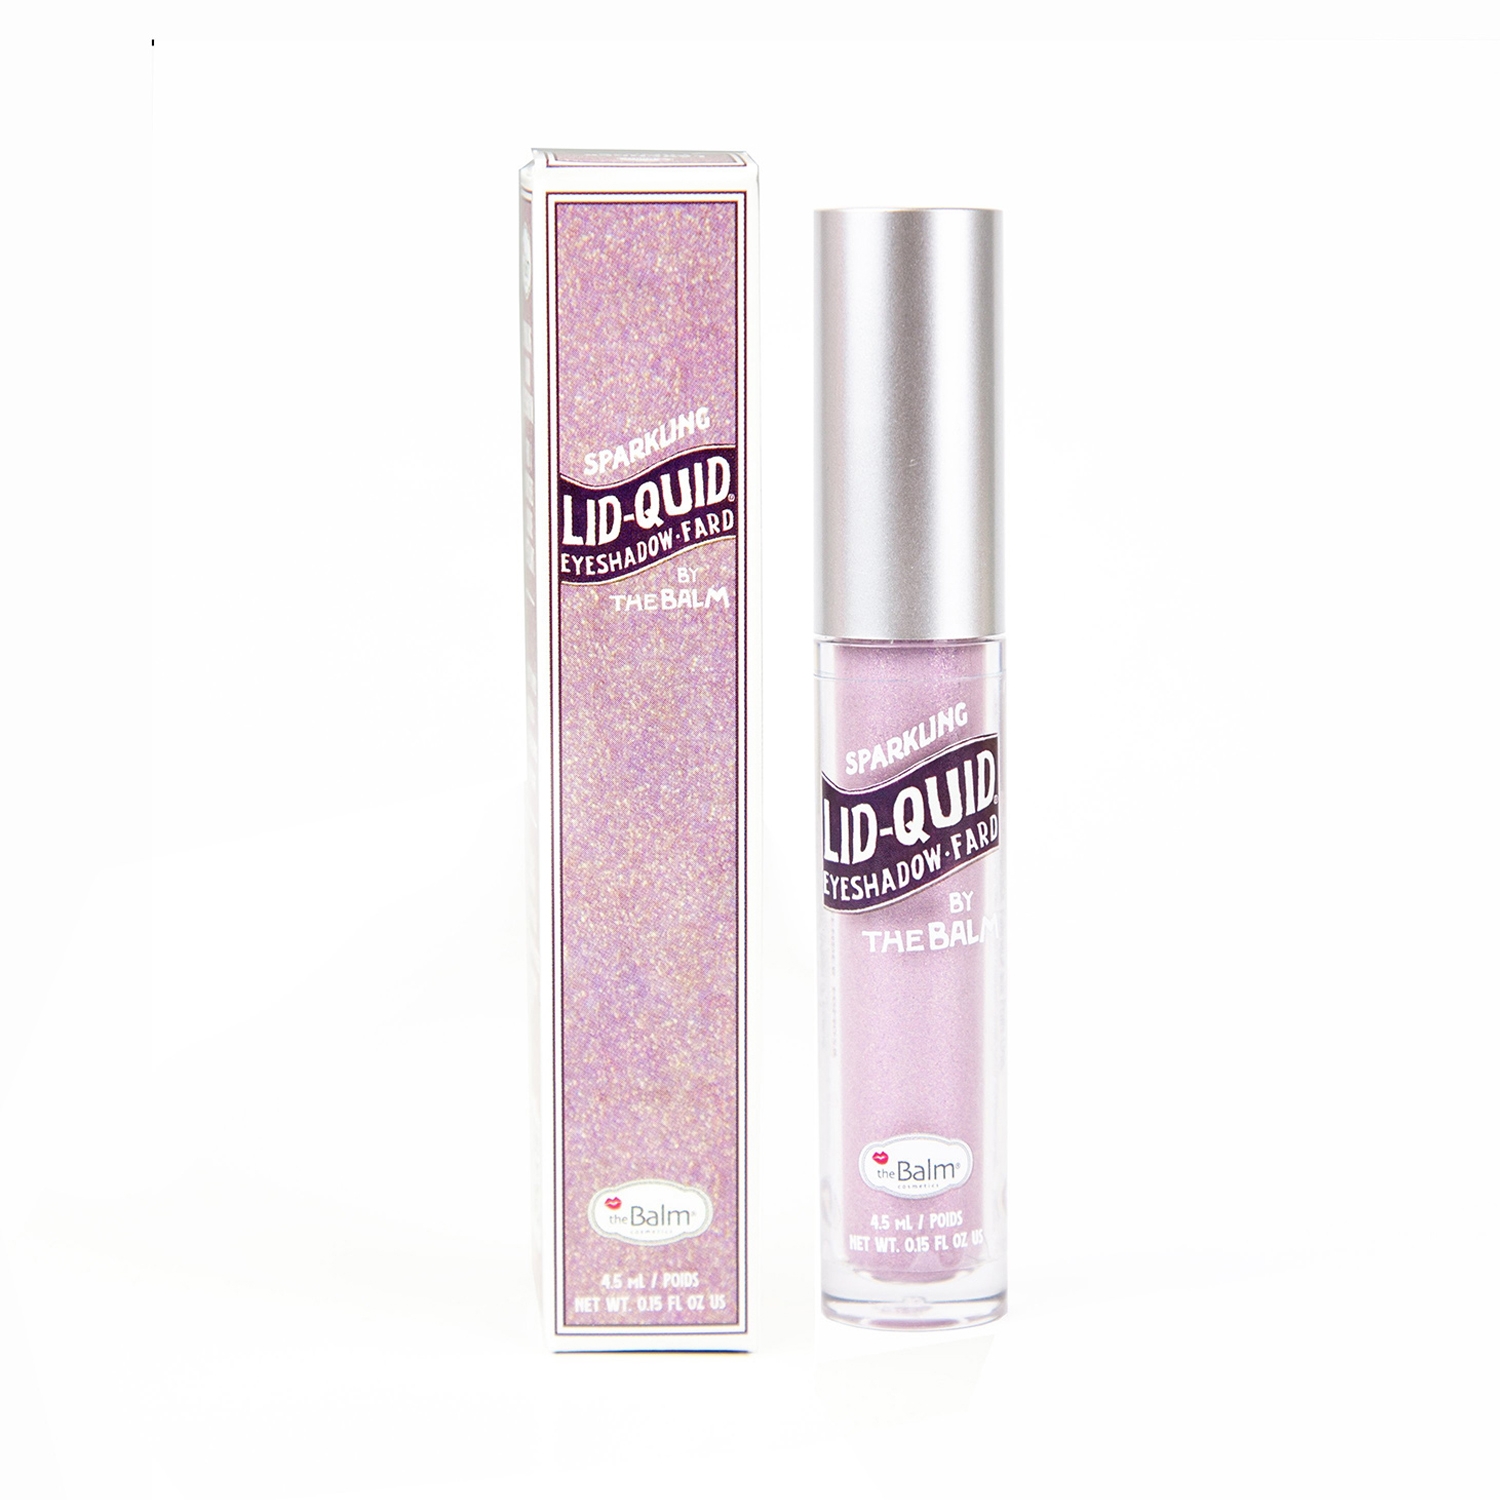 theBalm Cosmetics | theBalm Cosmetics Lid-Quid Sparkling Liquid Eyeshadow - Lavender Mimosa (4.5ml)